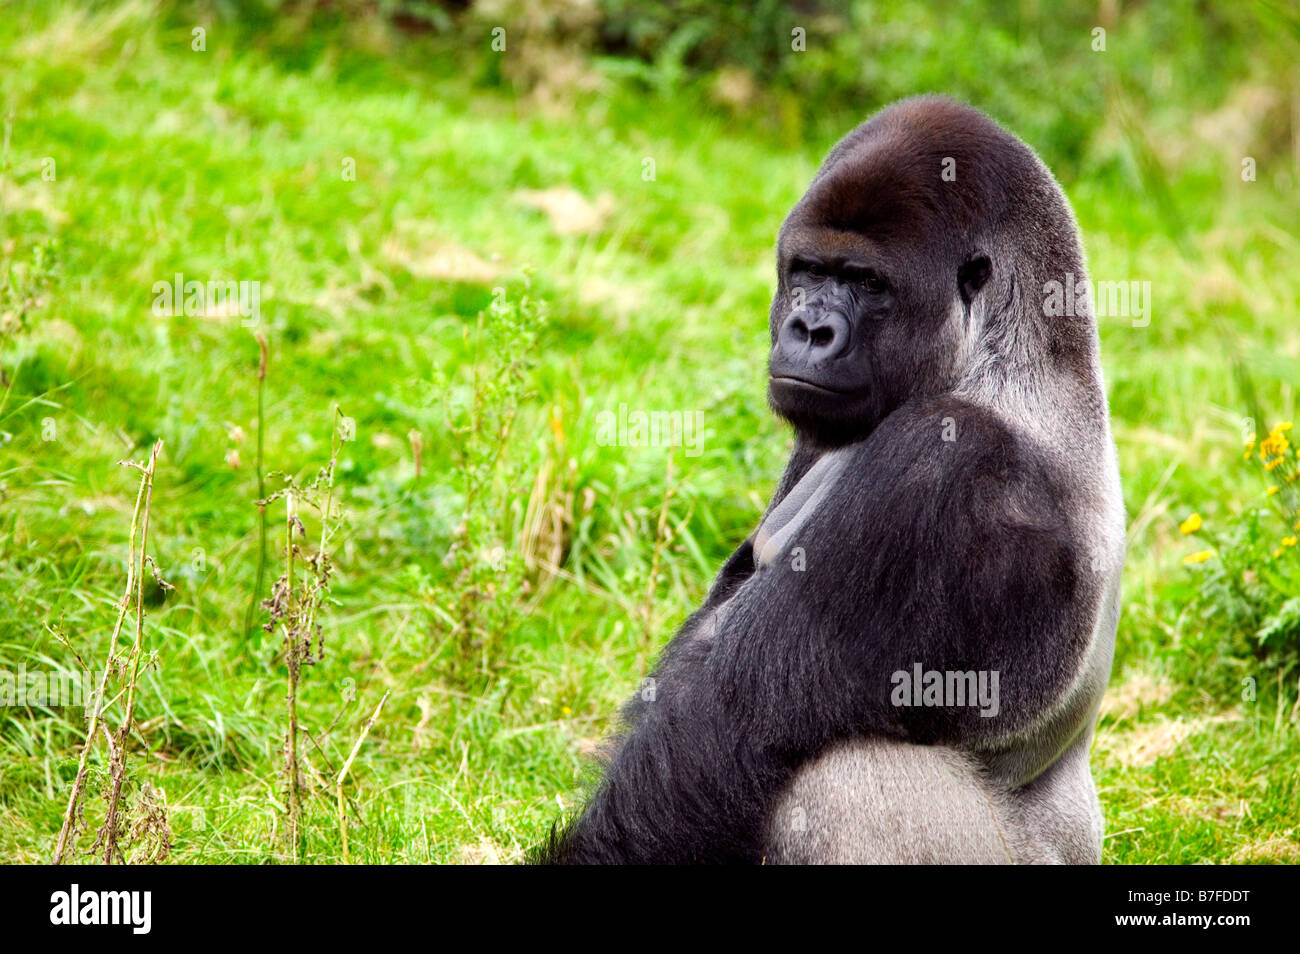 gorilla silverback Stock Photo